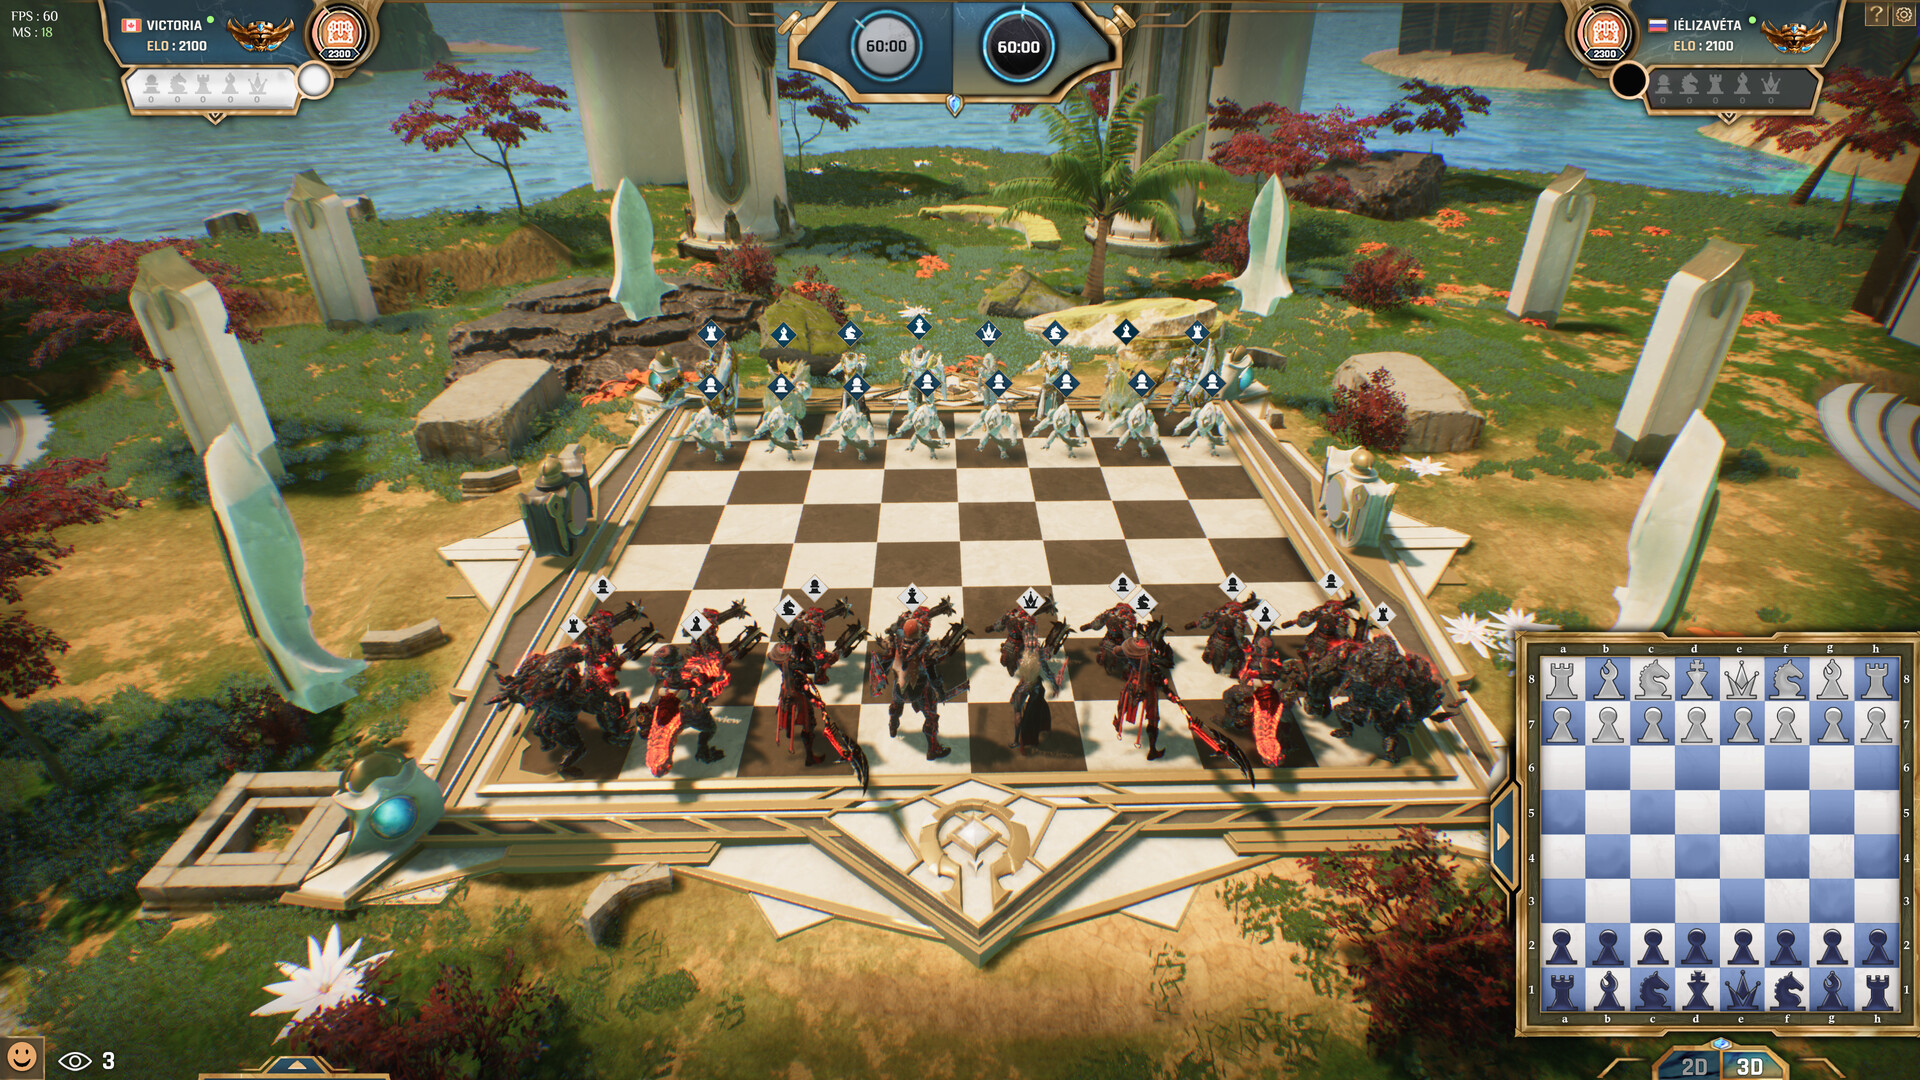  Chess Advantage 3 - PC : Video Games